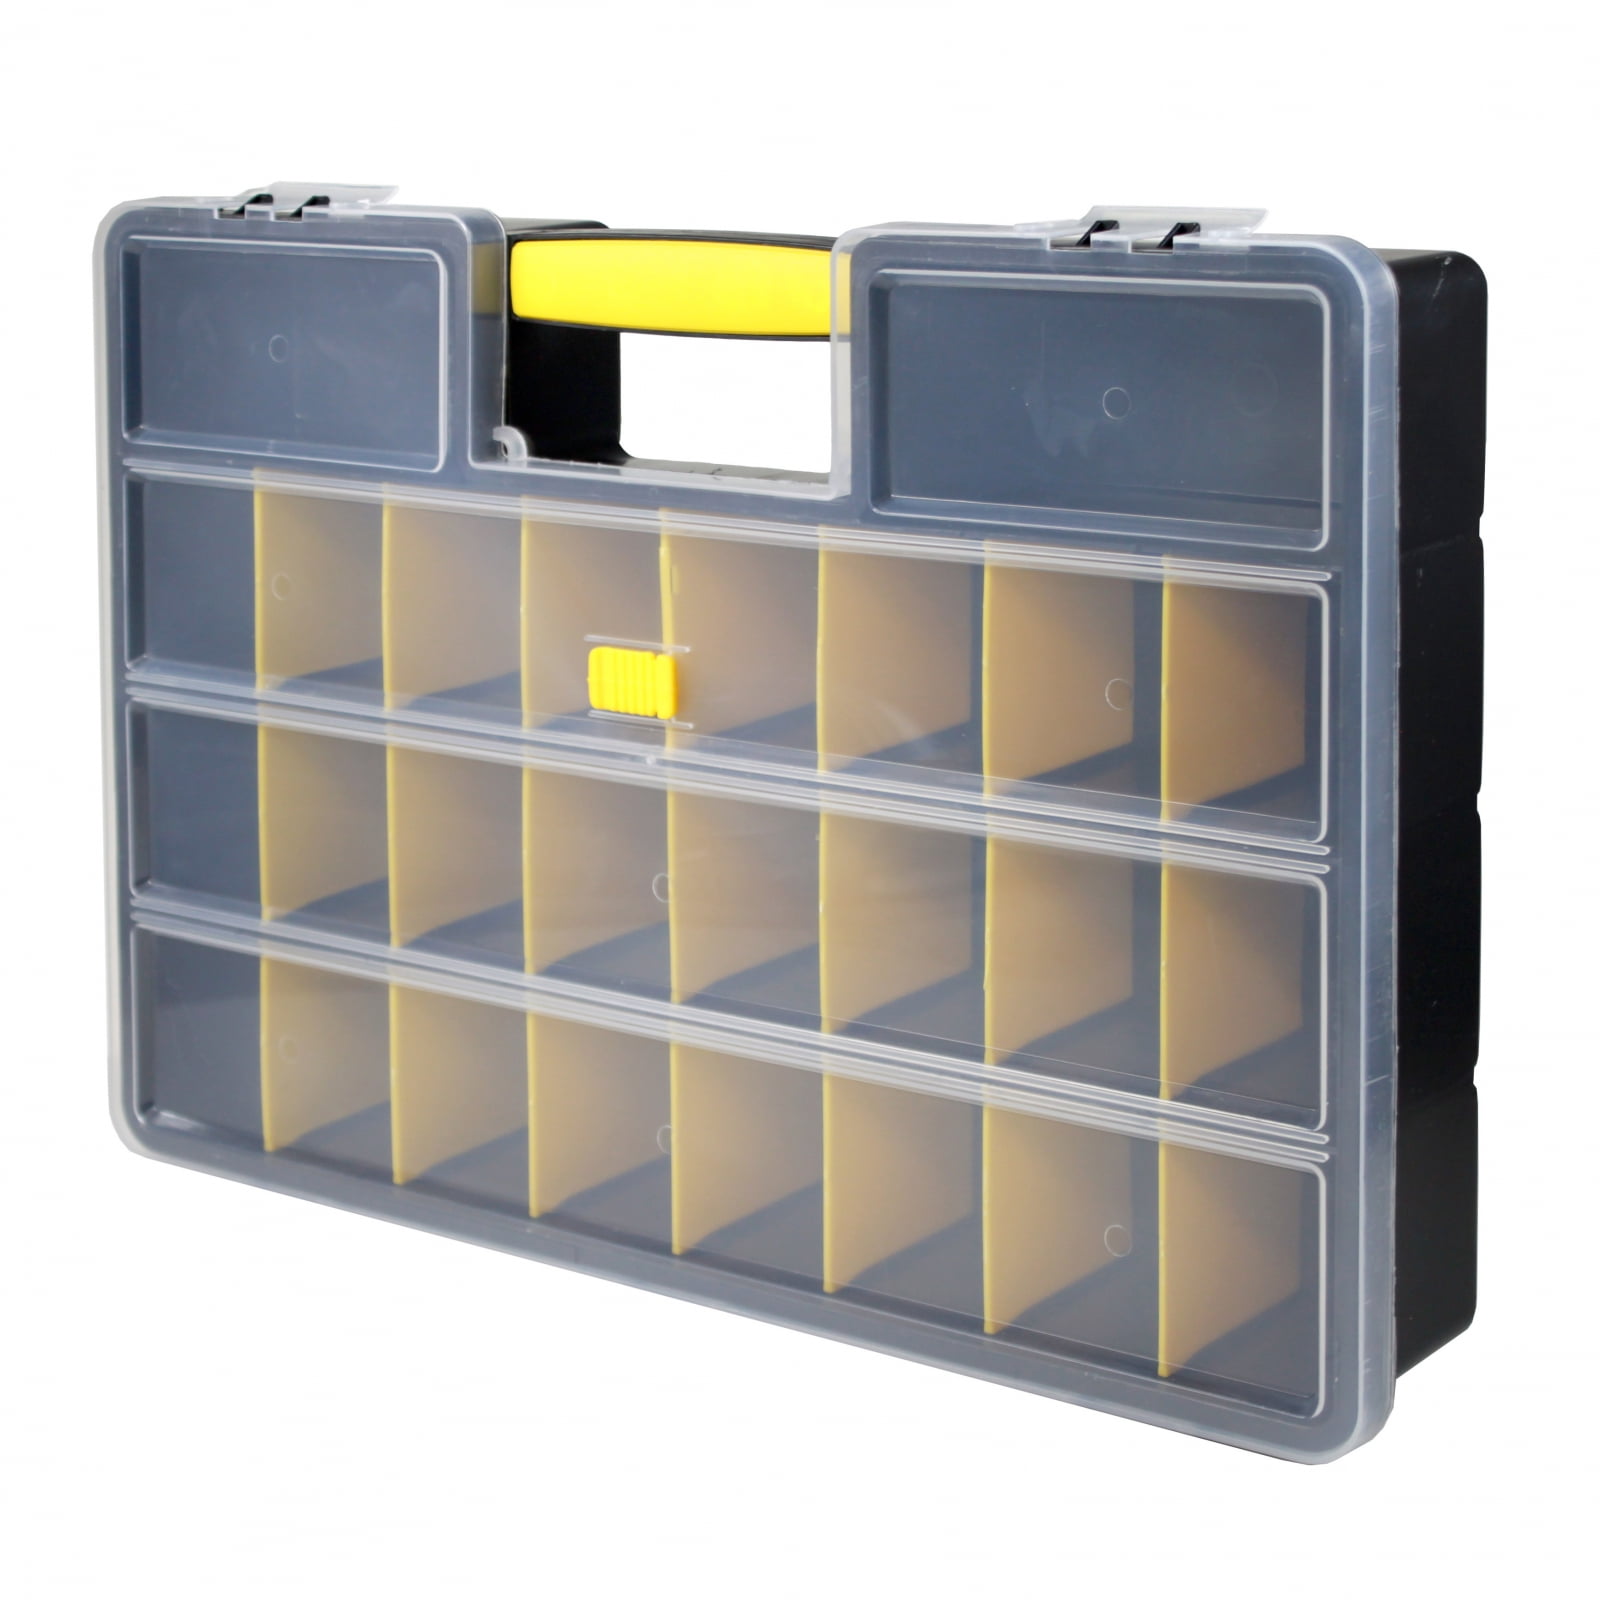 Hobby Craft Storage Toolbox Multi-Section Tool Organizer